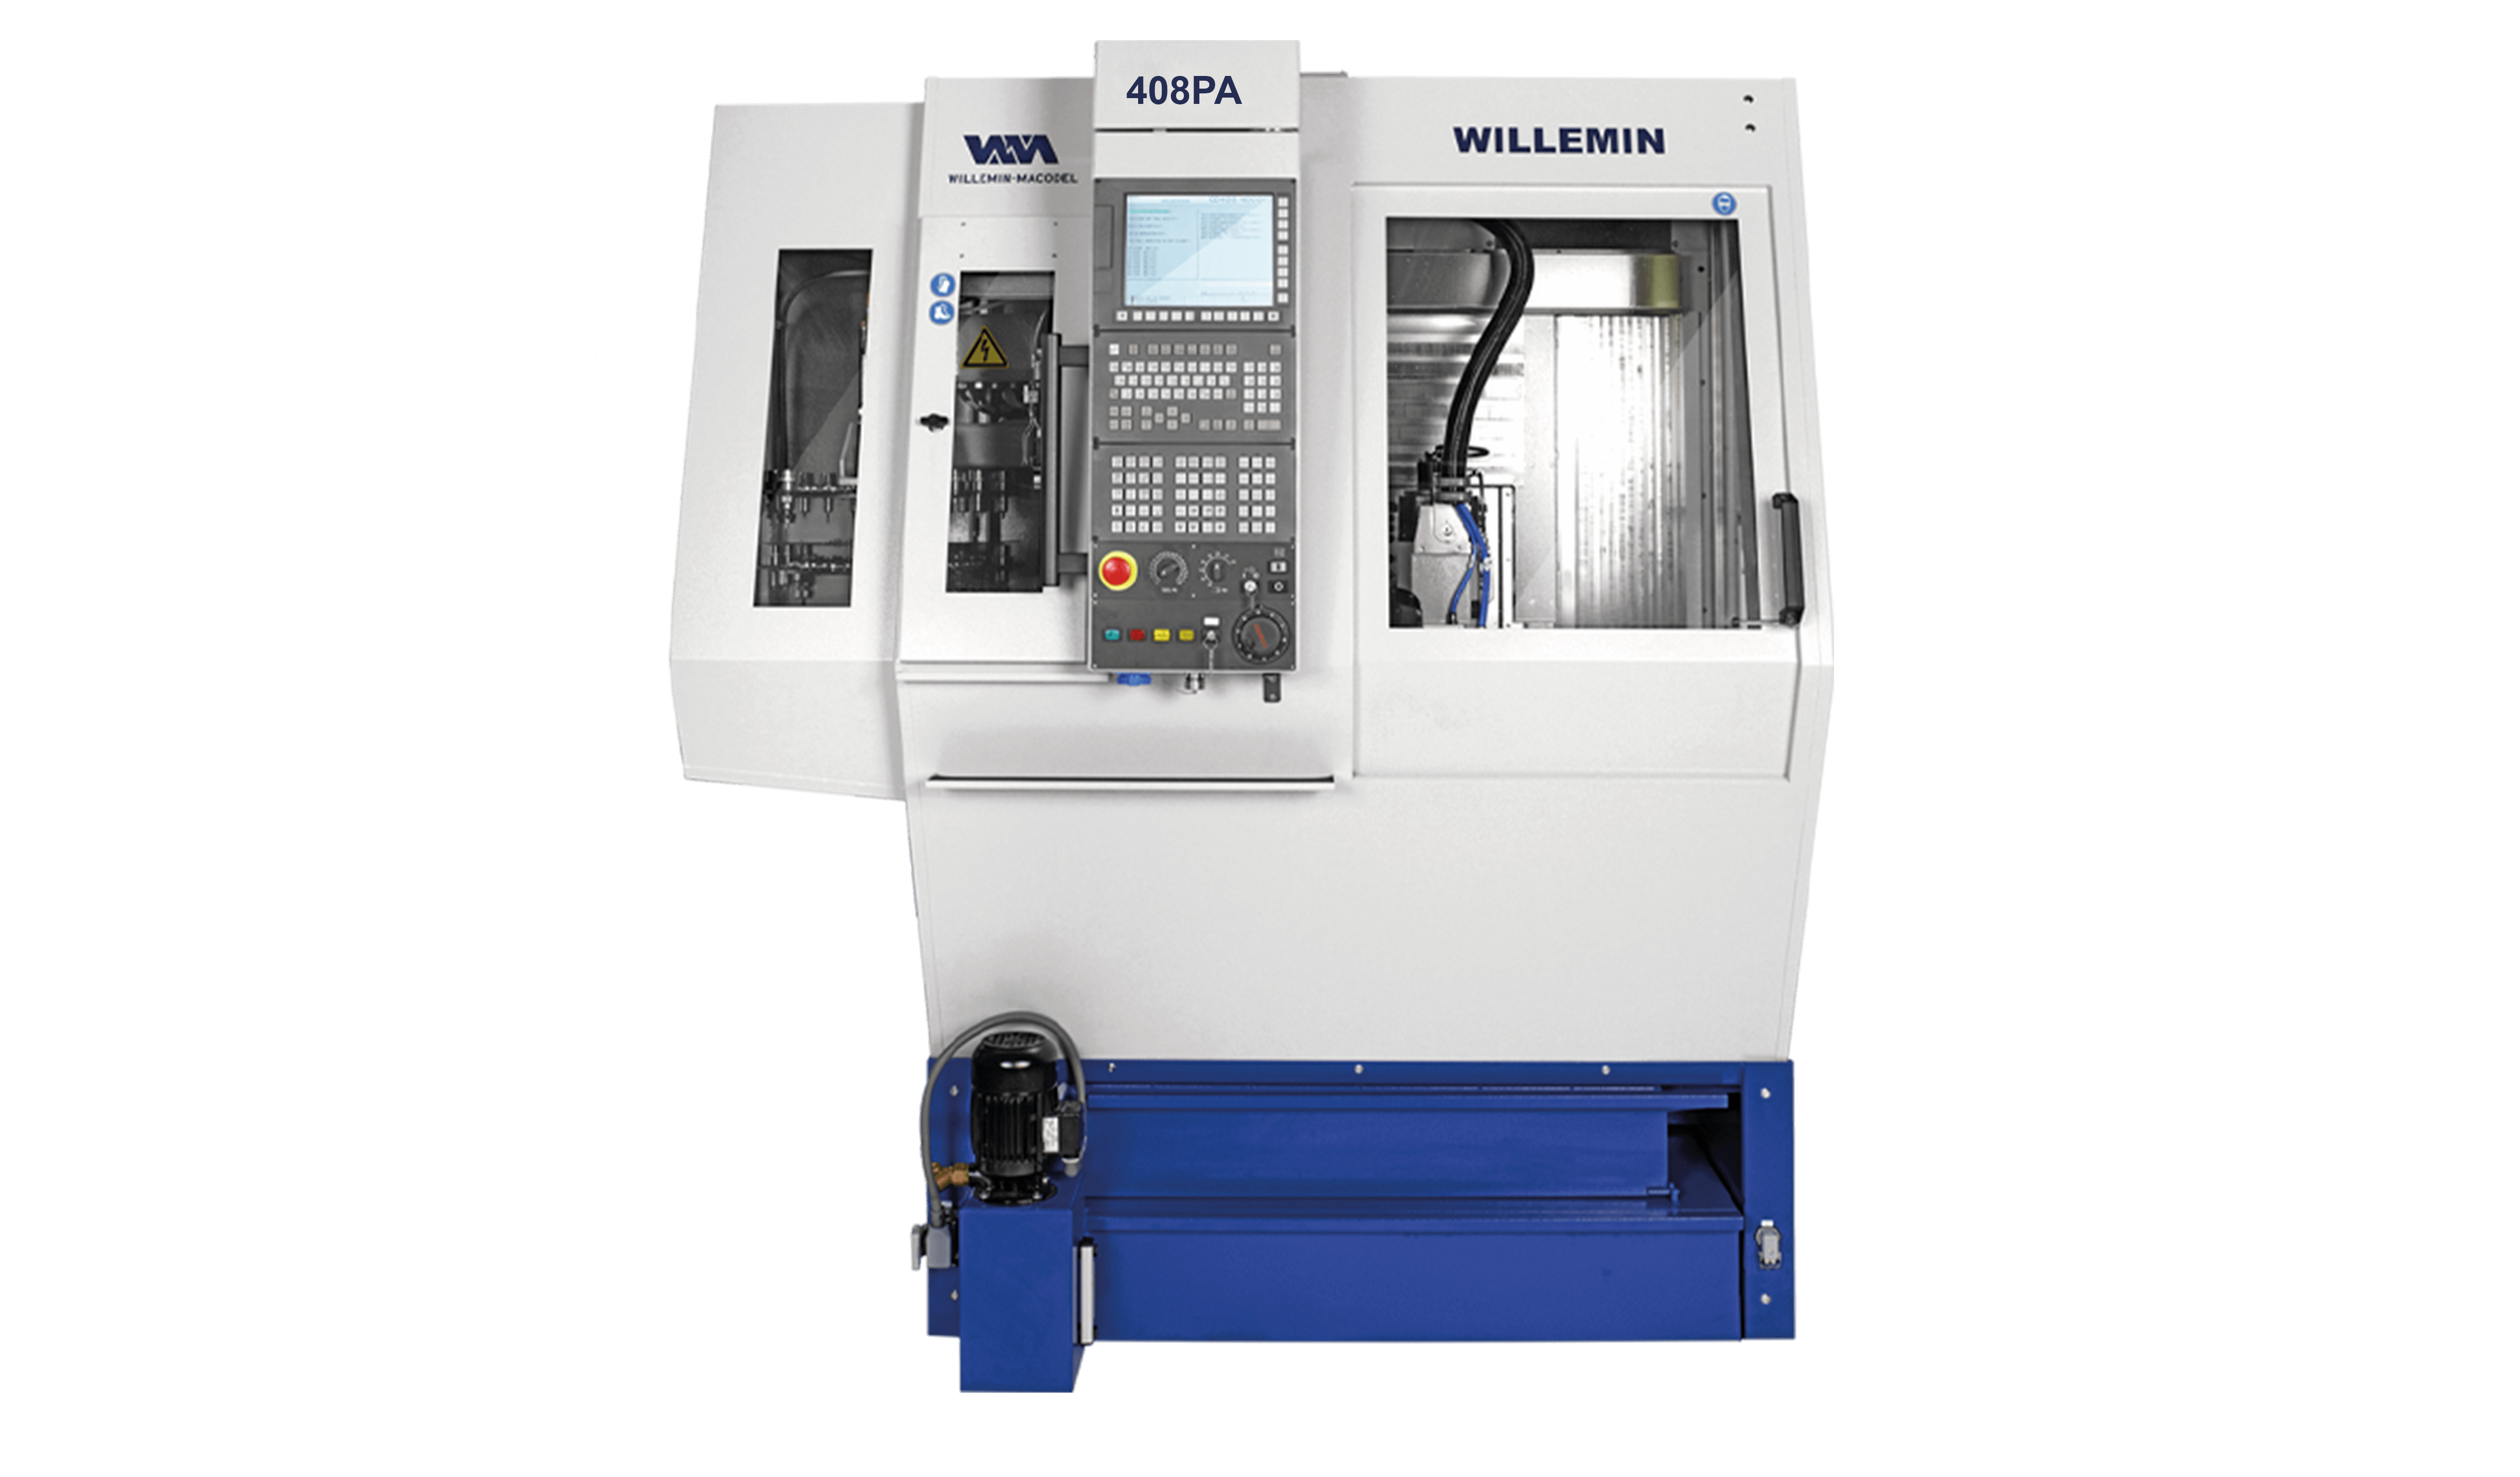 willemin-macodel machining center - serie 40 - 408PA